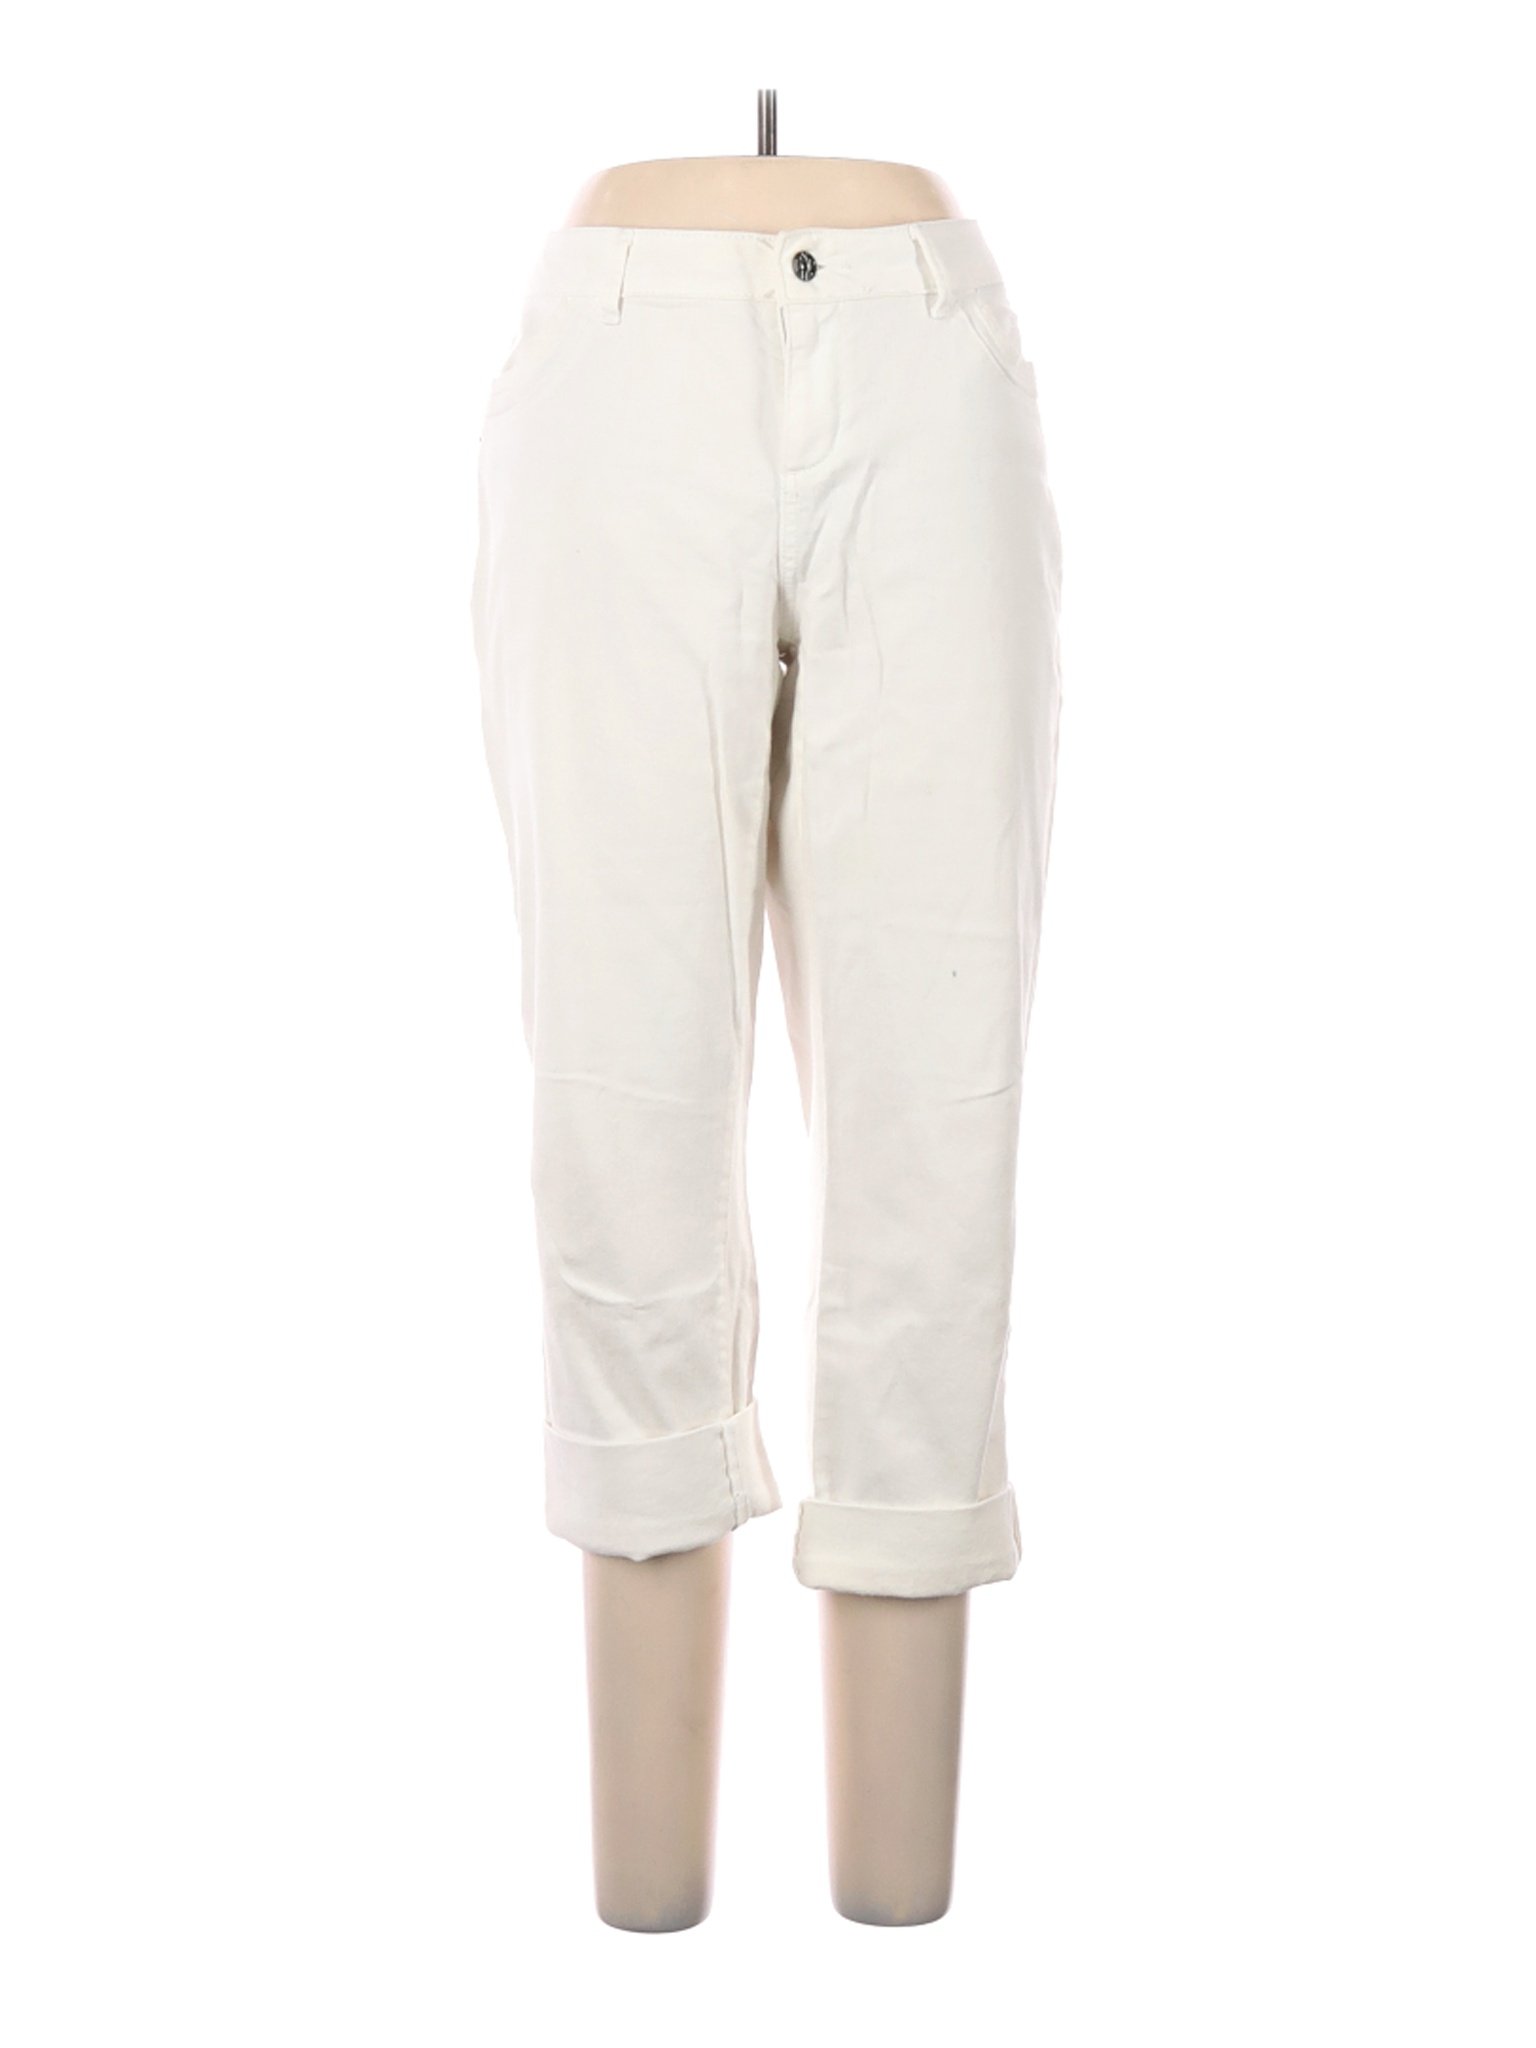 Simply Vera Vera Wang Women White Jeans 16 | eBay